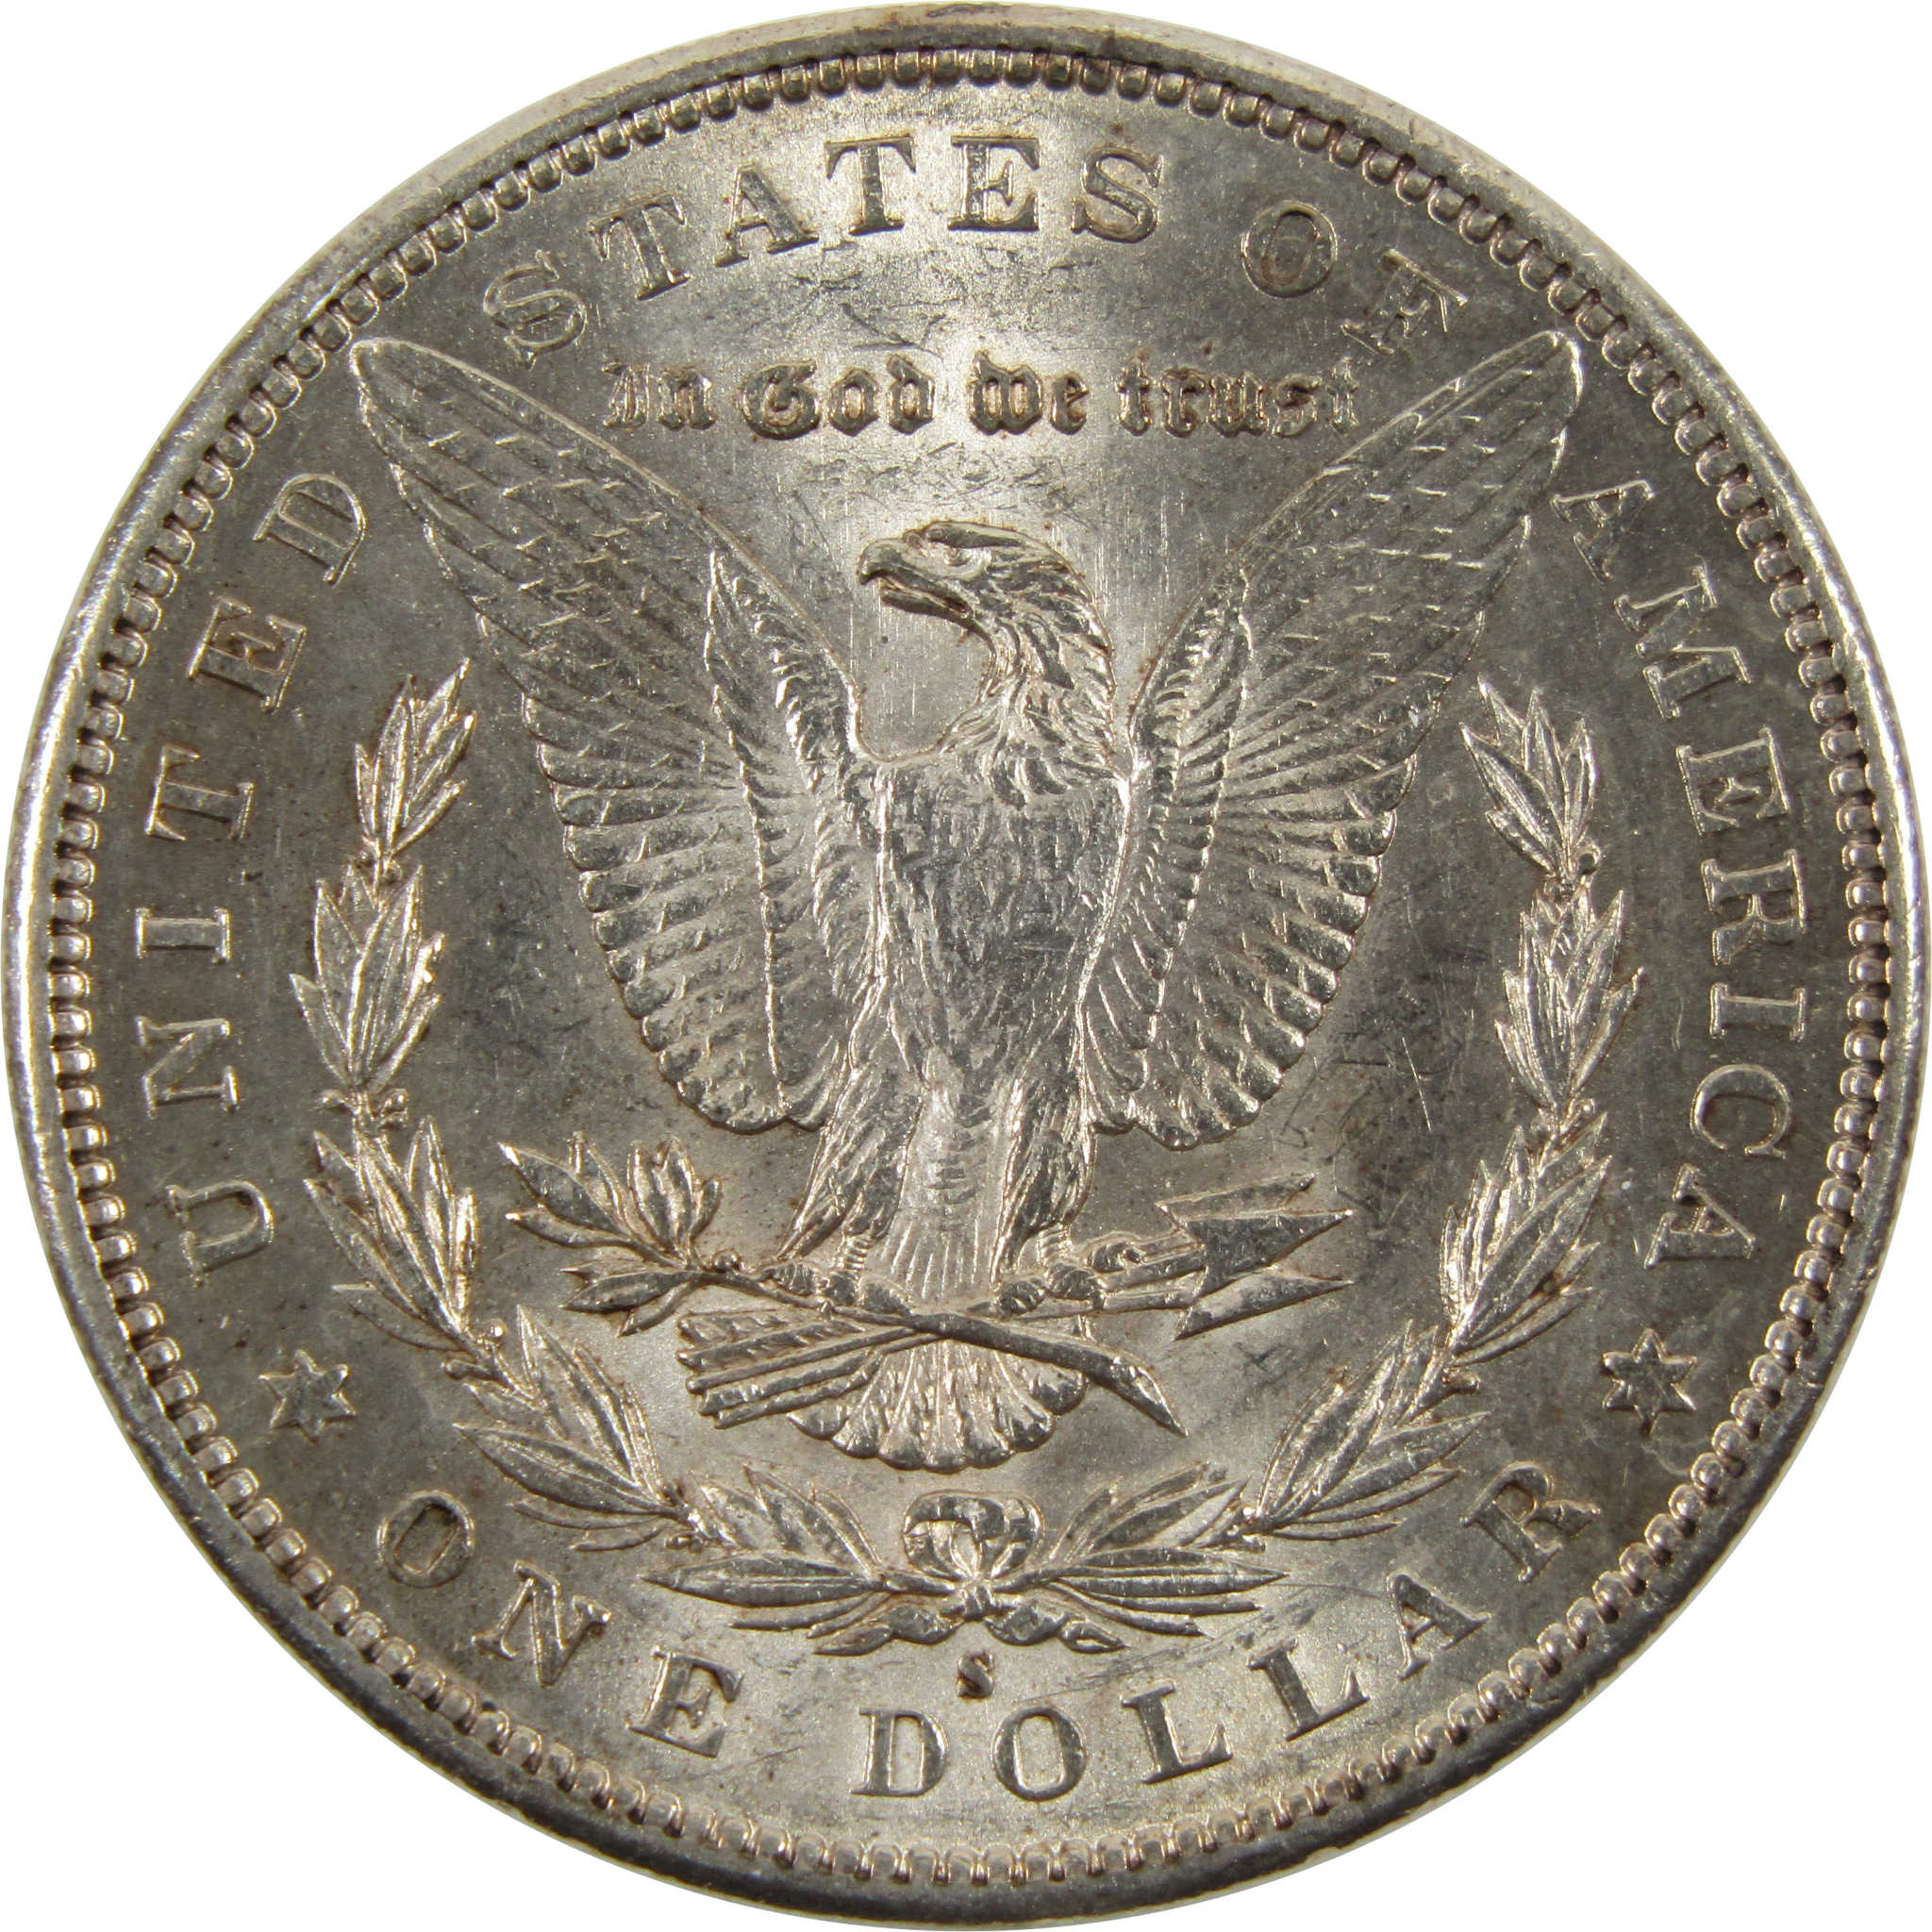 1897 S Morgan Dollar Borderline Uncirculated 90% Silver $1 SKU:I7642 - Morgan coin - Morgan silver dollar - Morgan silver dollar for sale - Profile Coins &amp; Collectibles